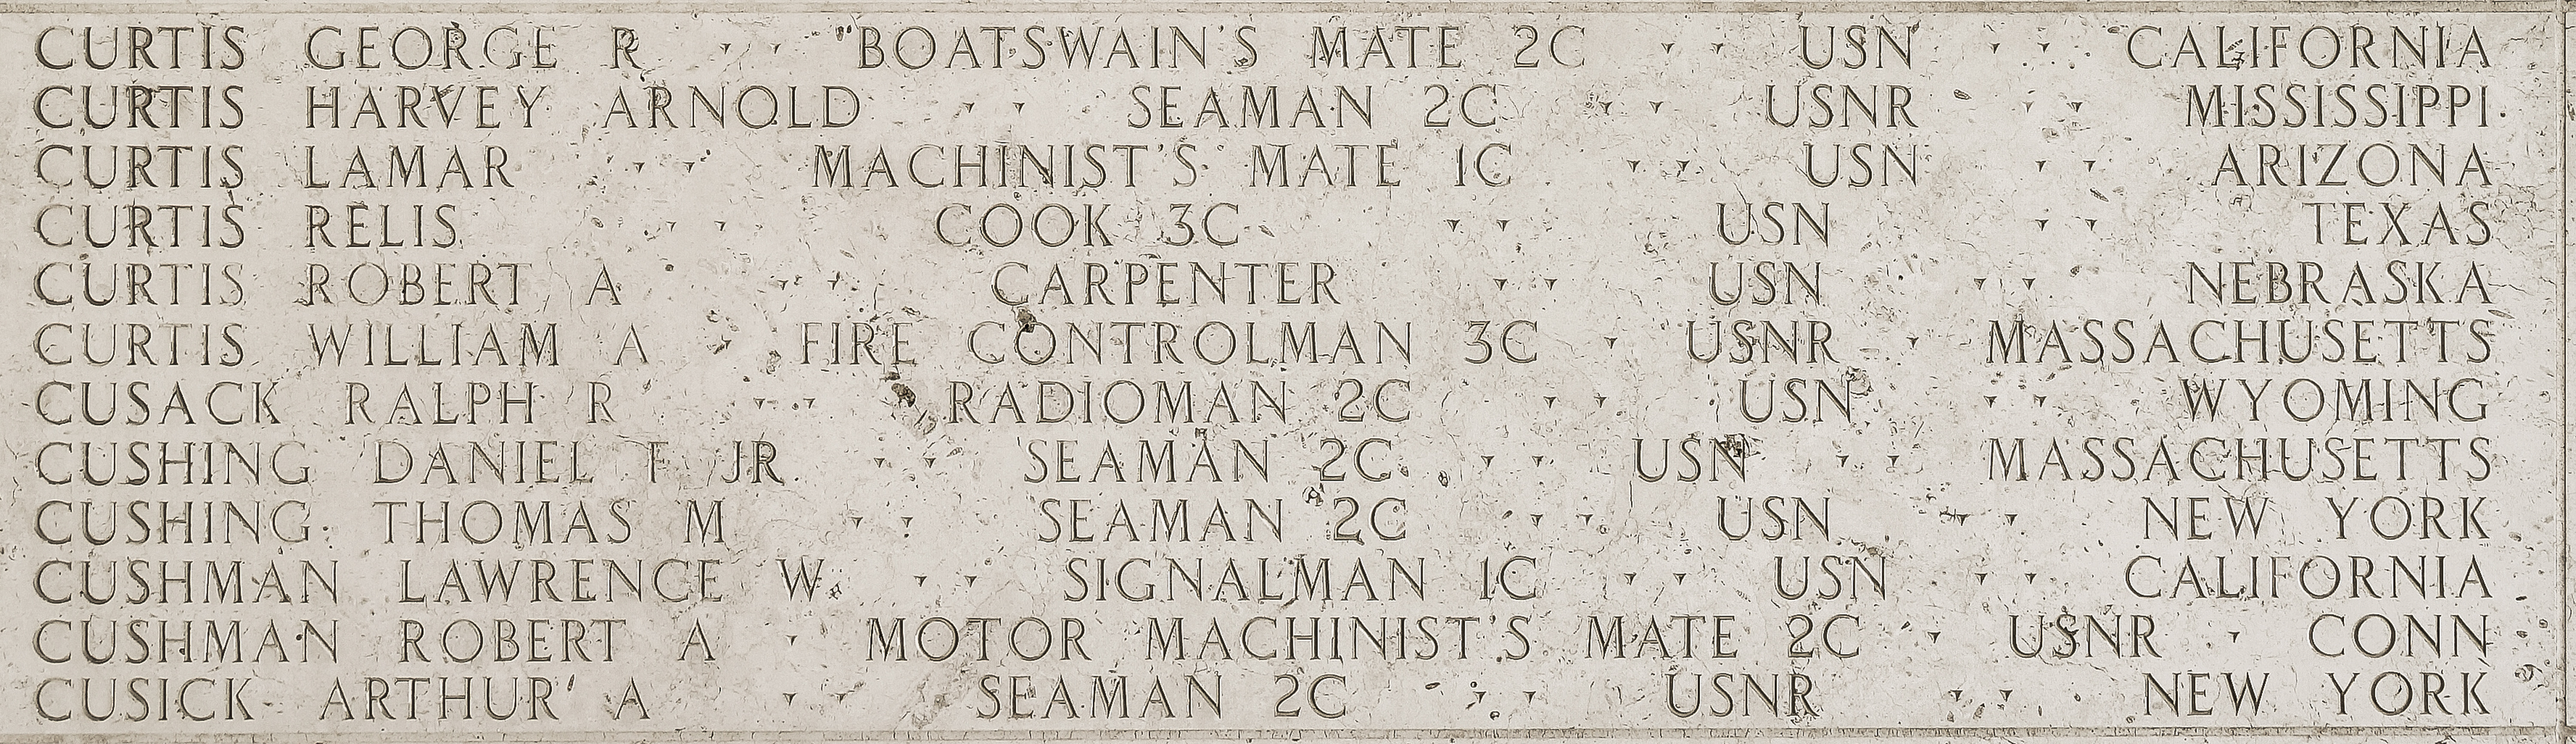 Lawrence W. Cushman, Signalman First Class